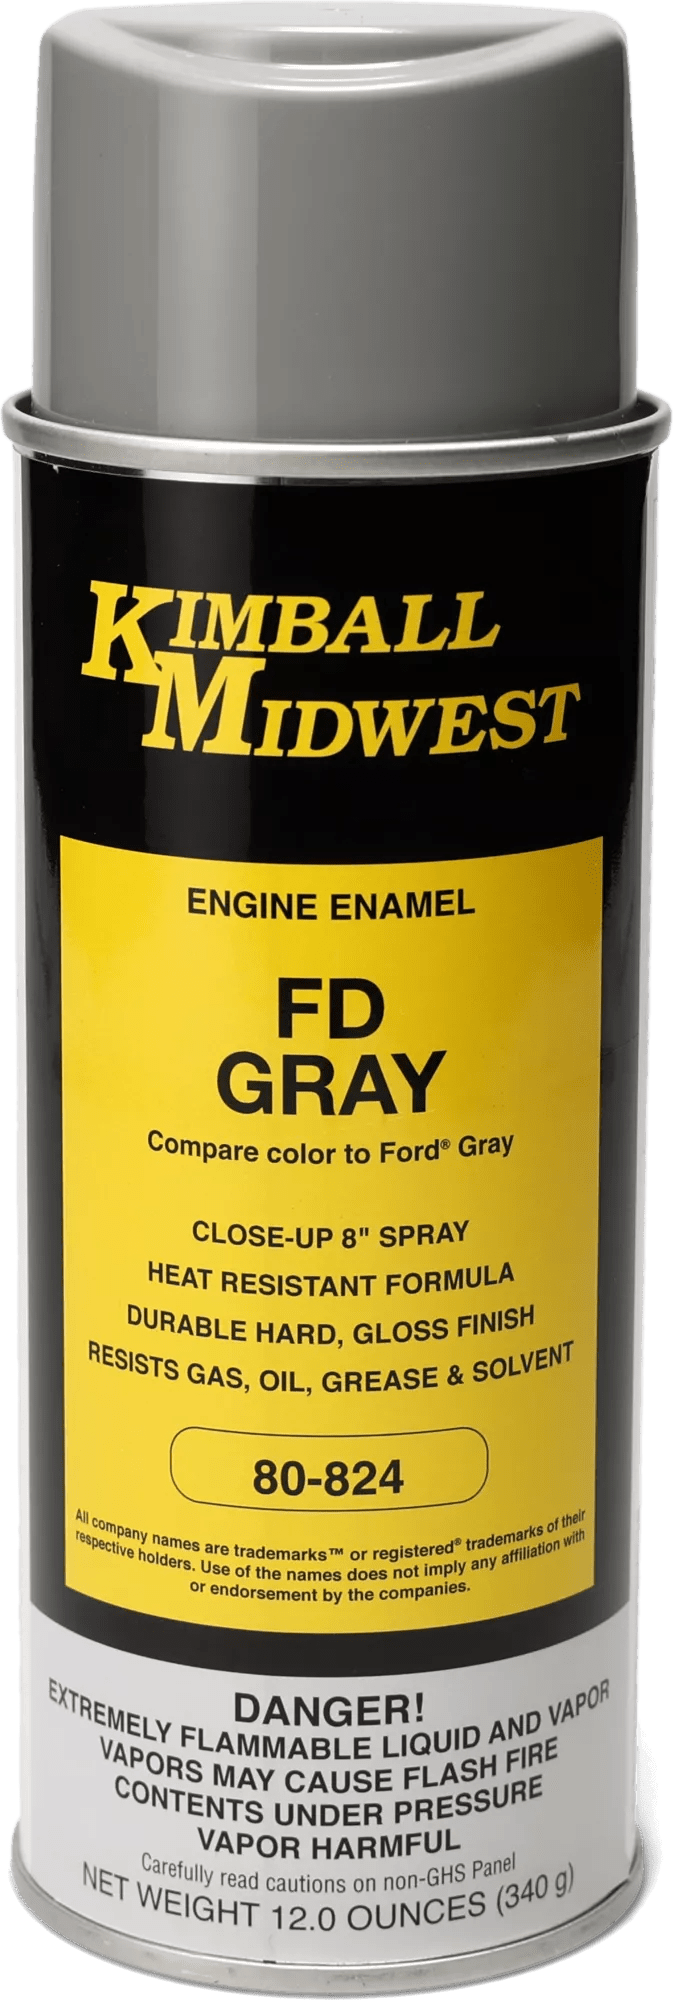 FD Gray Engine Oil-Based Enamel Spray Paint